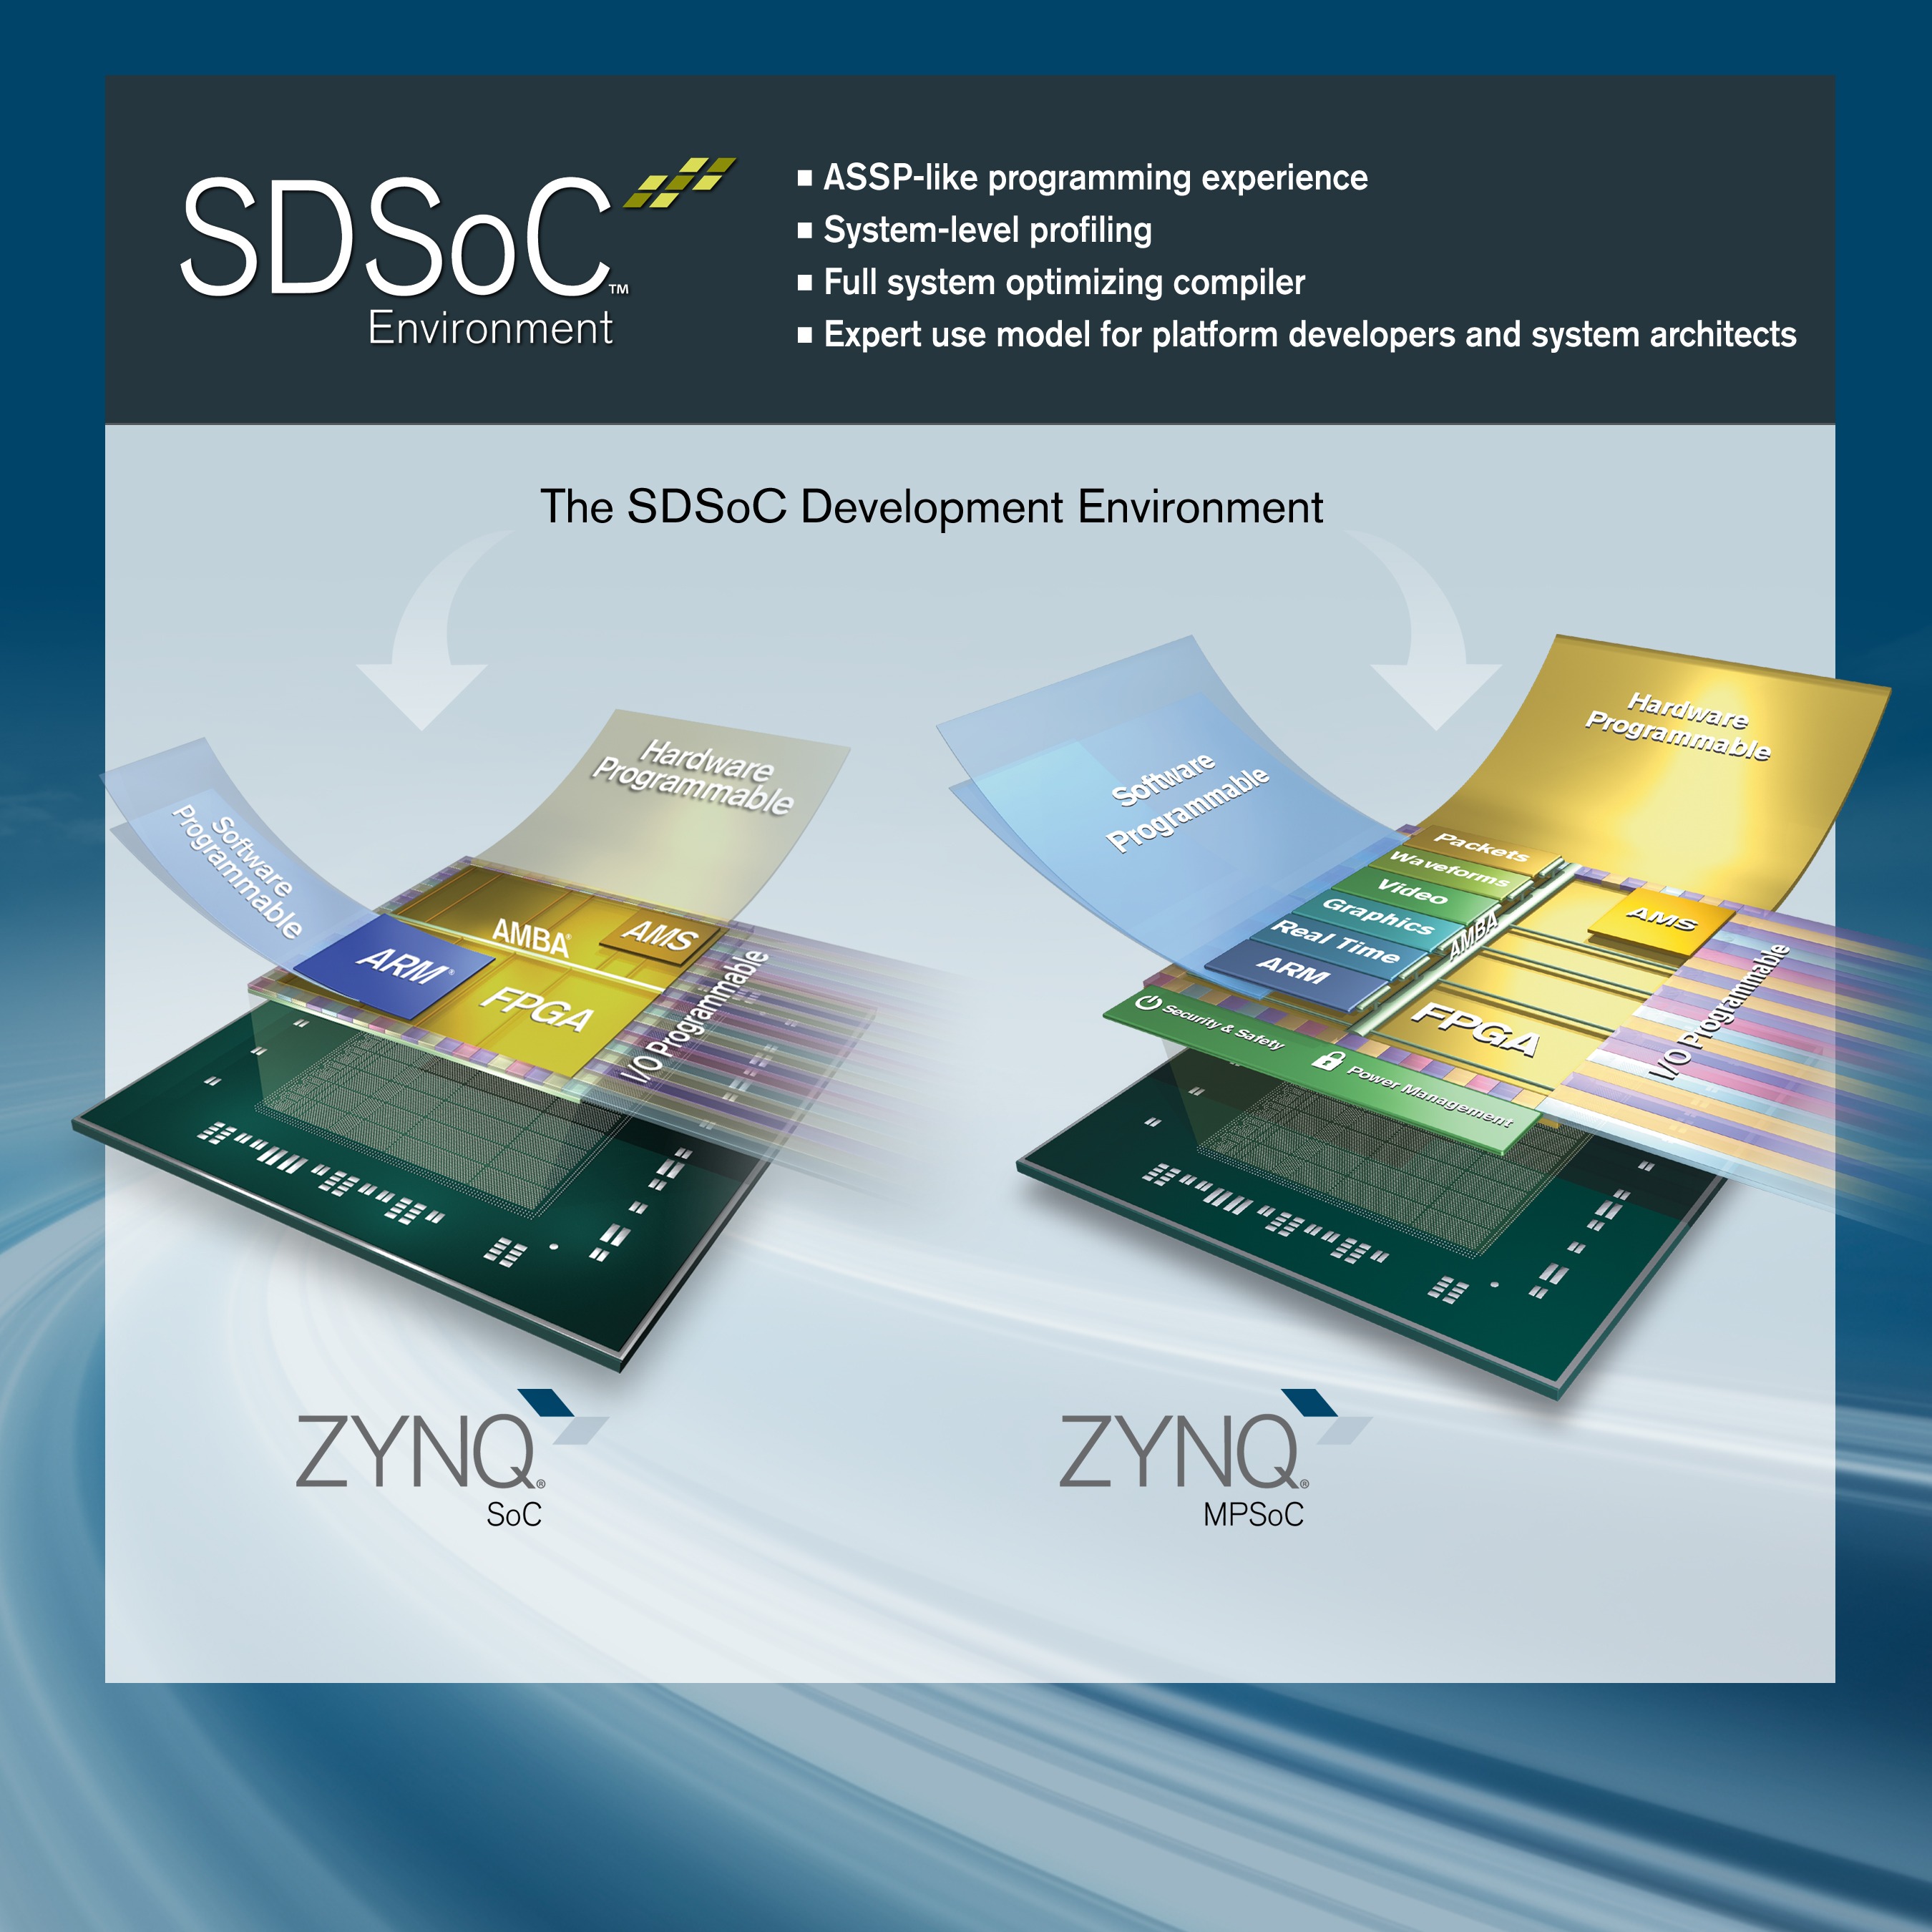 SDSoC Development Environment